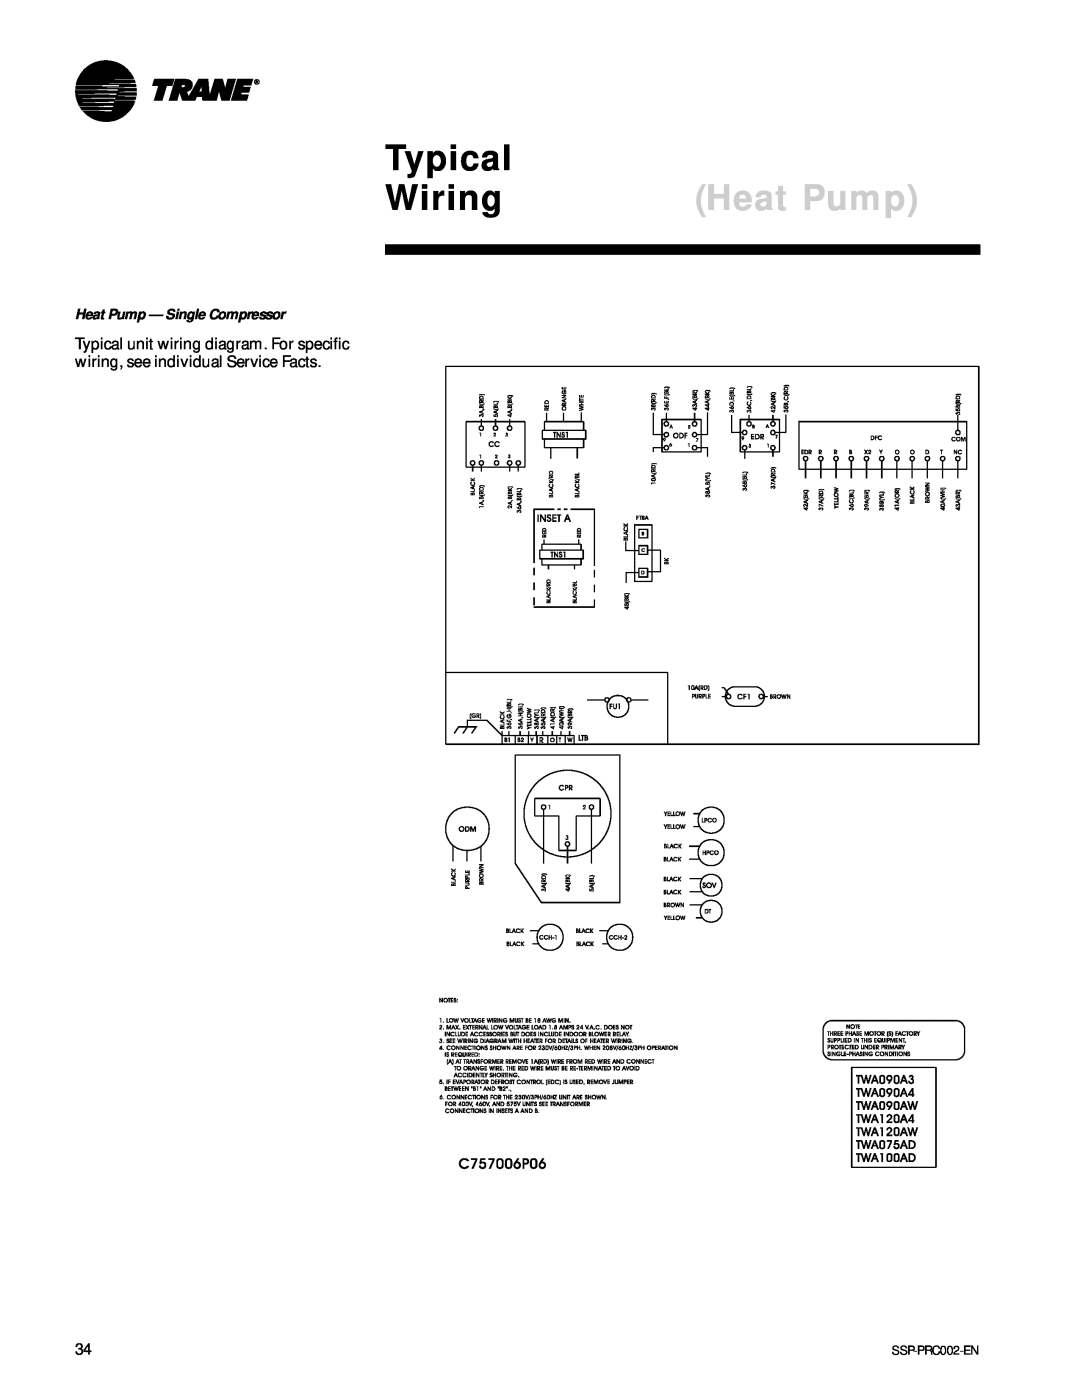 Trane TWA200B, TWA075A, TWE200B, TWE050A manual Typical, Wiring, Heat Pump - Single Compressor 